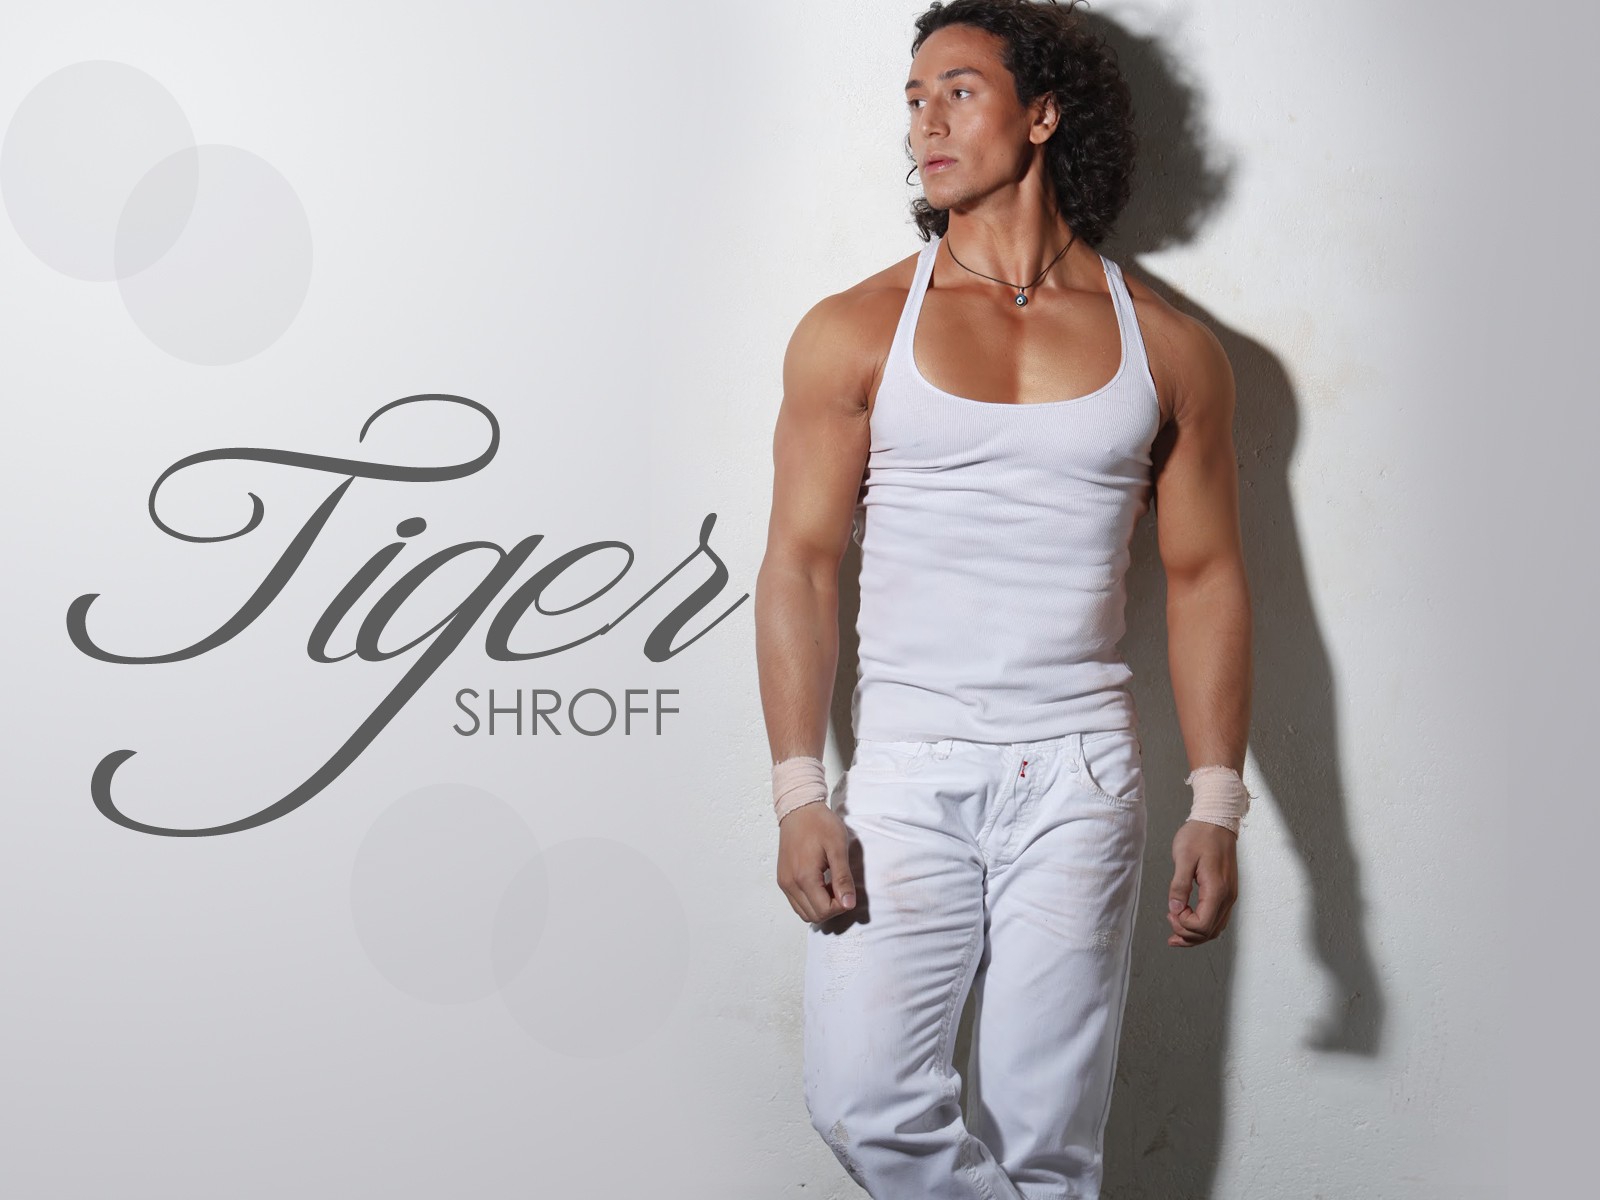 Tiger Shroff - 1600x1200 Wallpaper 